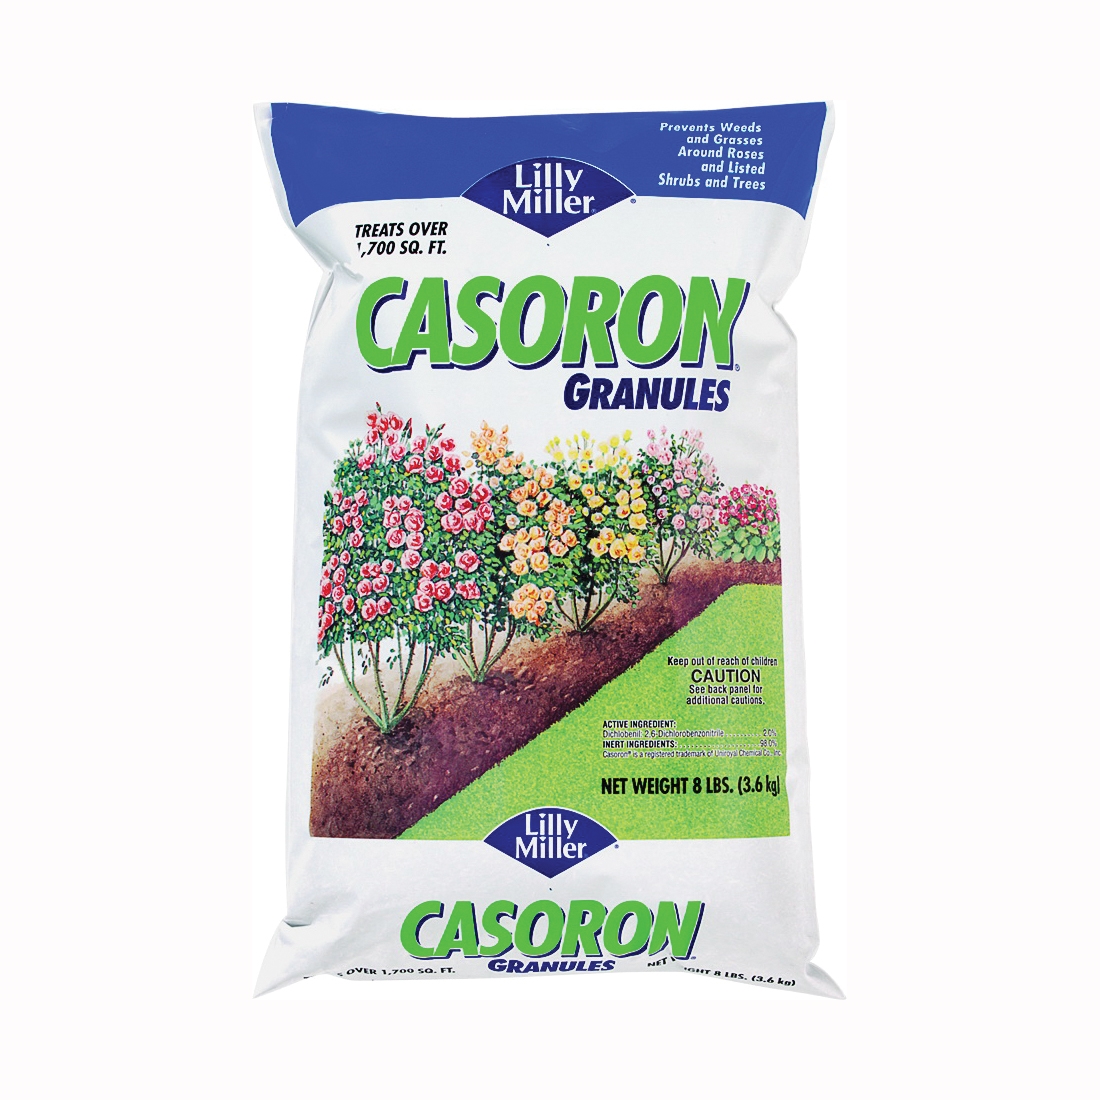 Image 100524195 Casoron Granules Herbicide, Granular, Brown/White, 8 lb Bag - 1